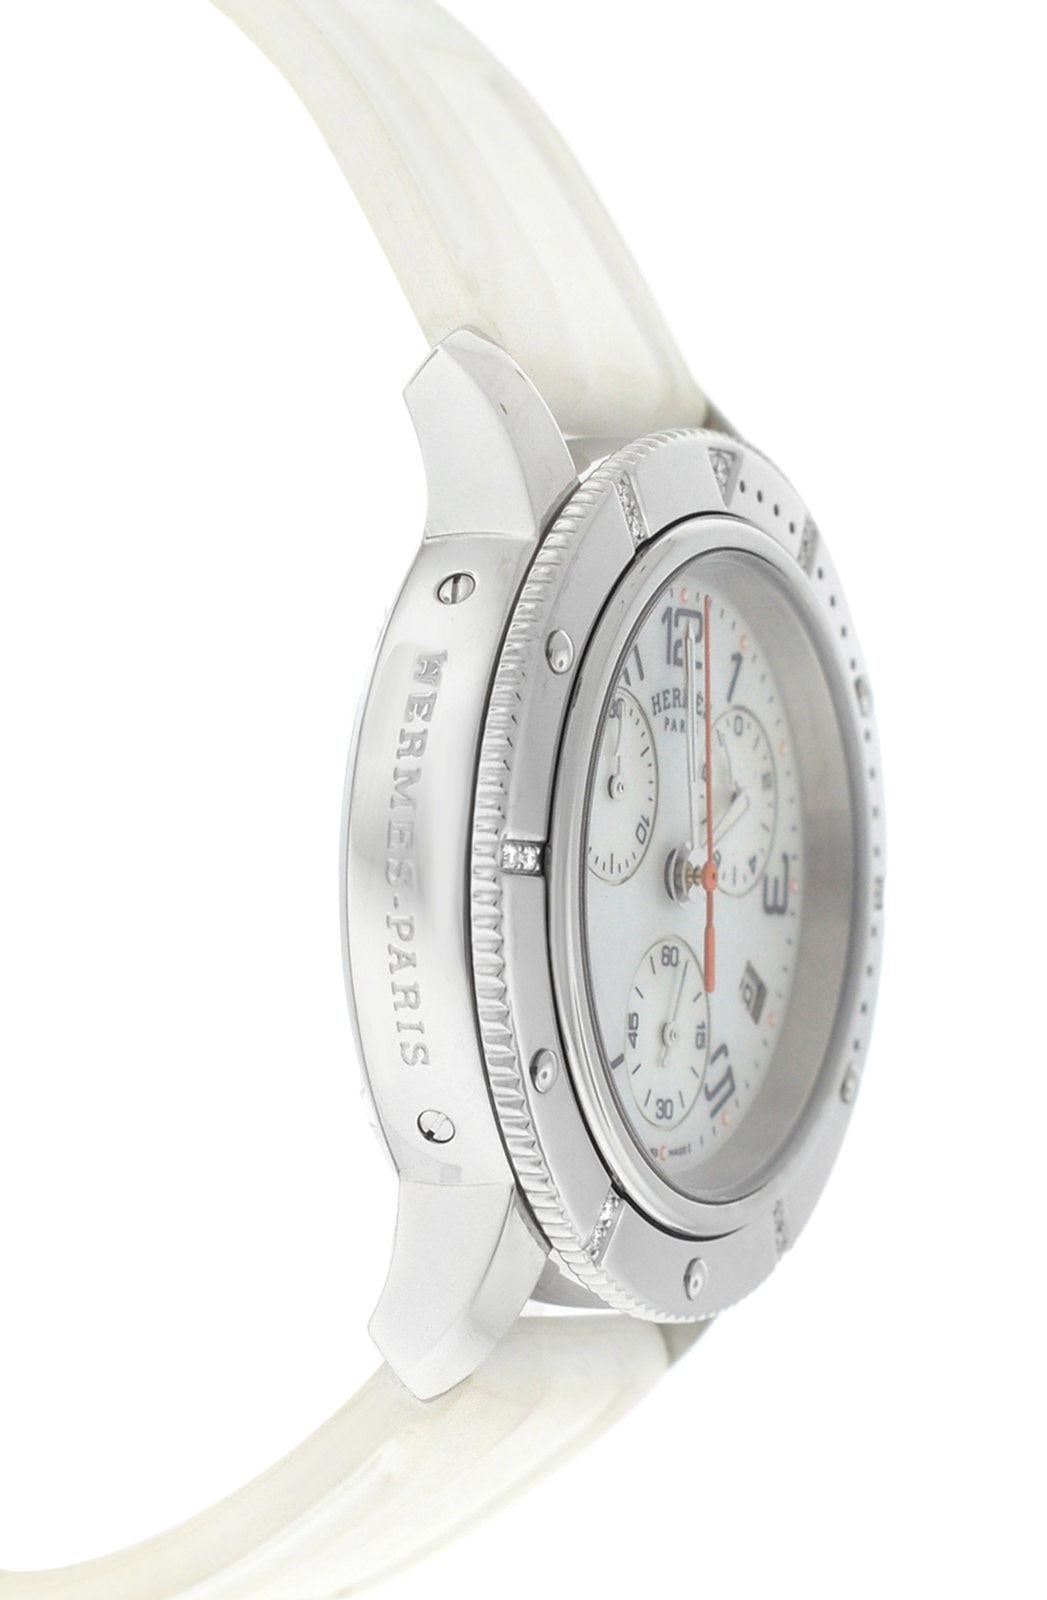 canon quartz watch price